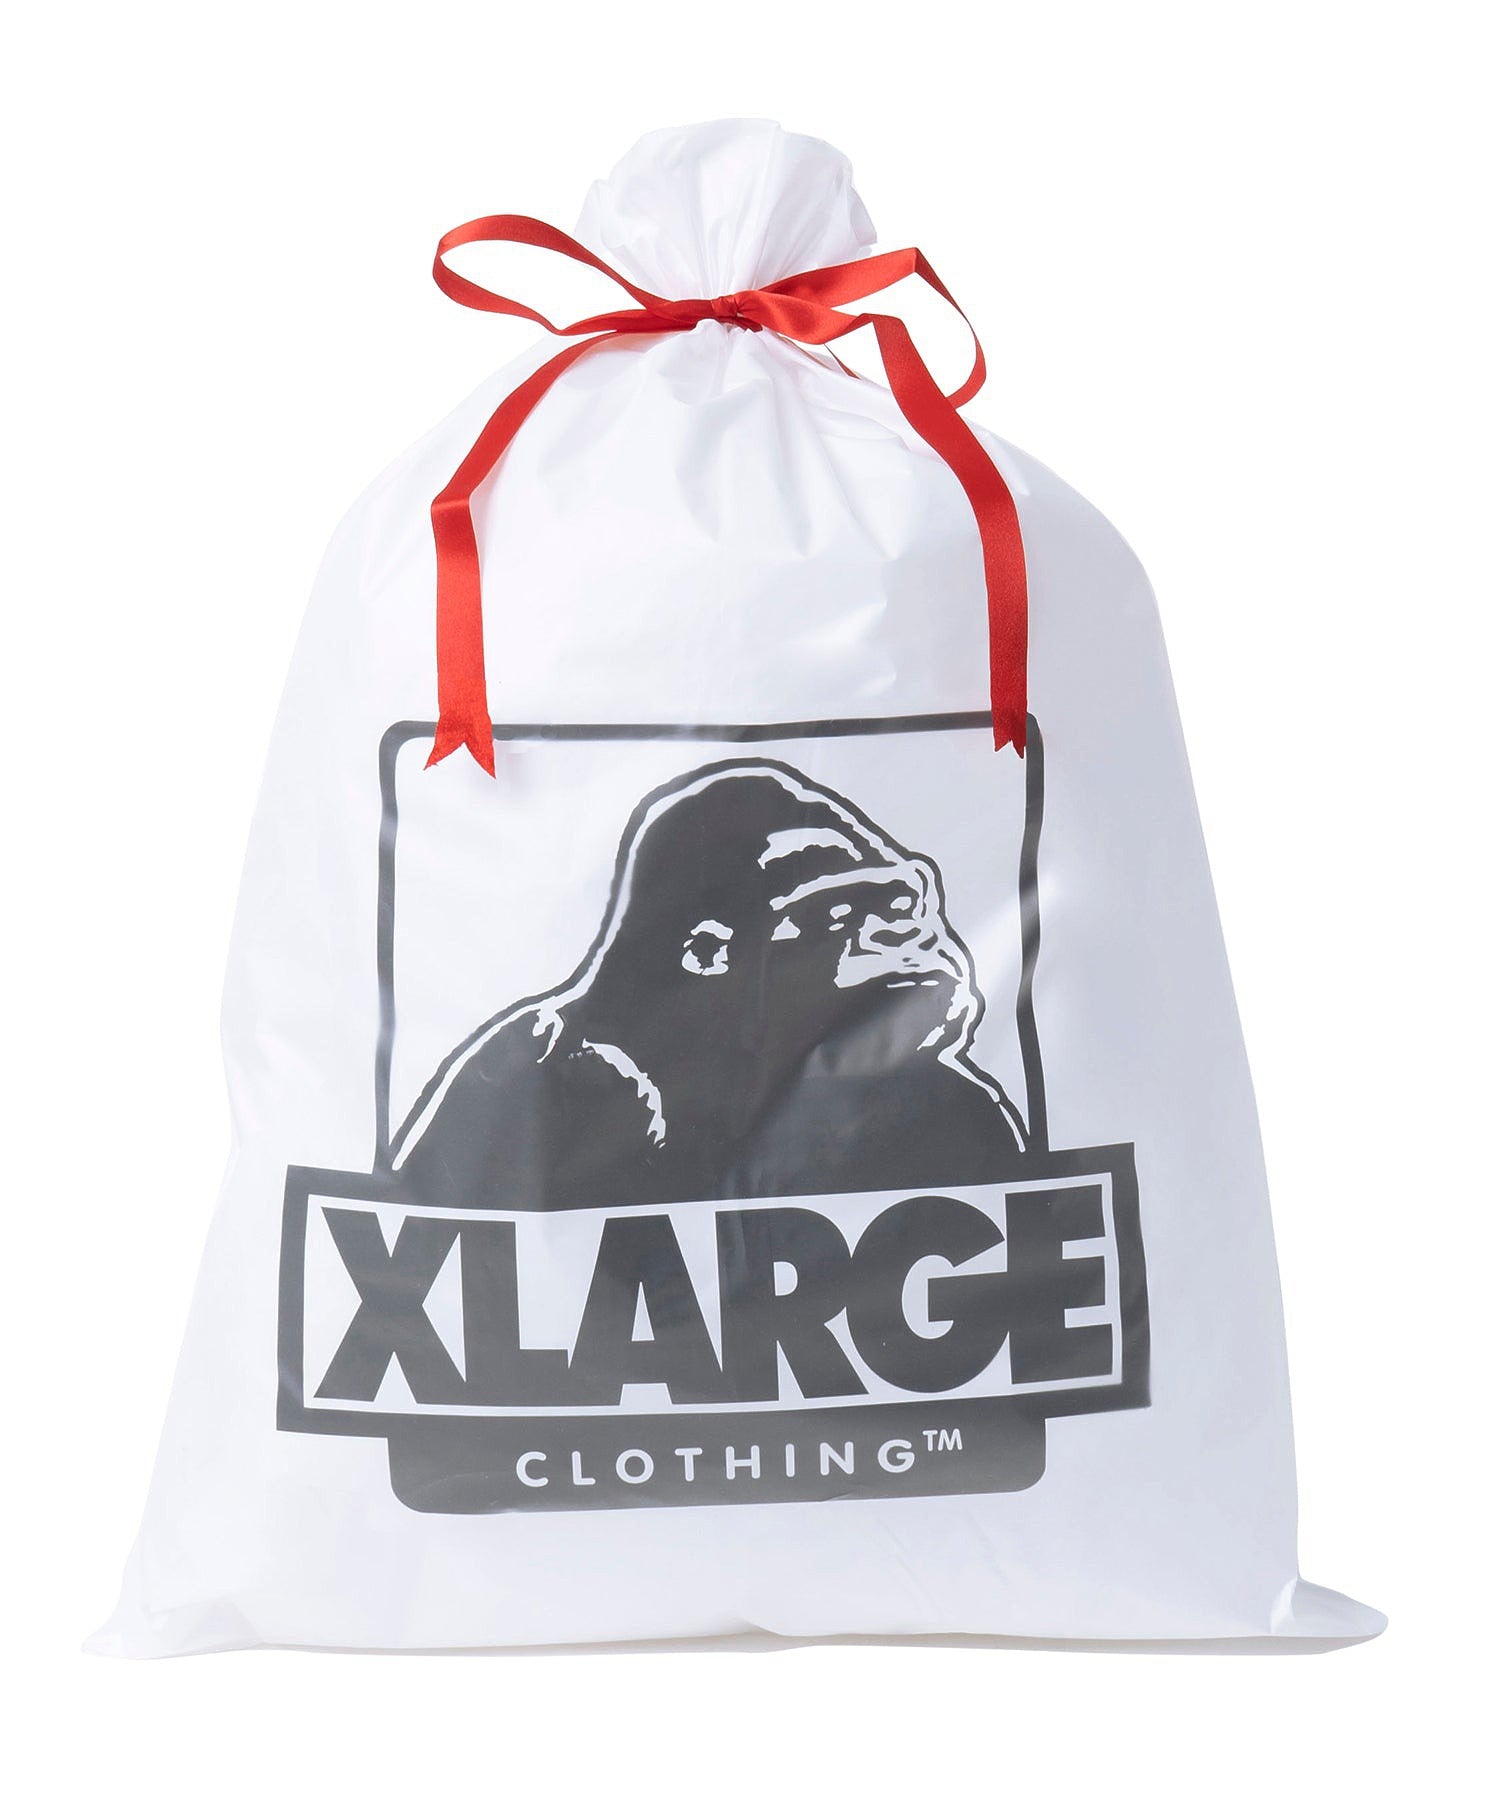 XL GIFT BAG SET CALIF(L)  XLARGE